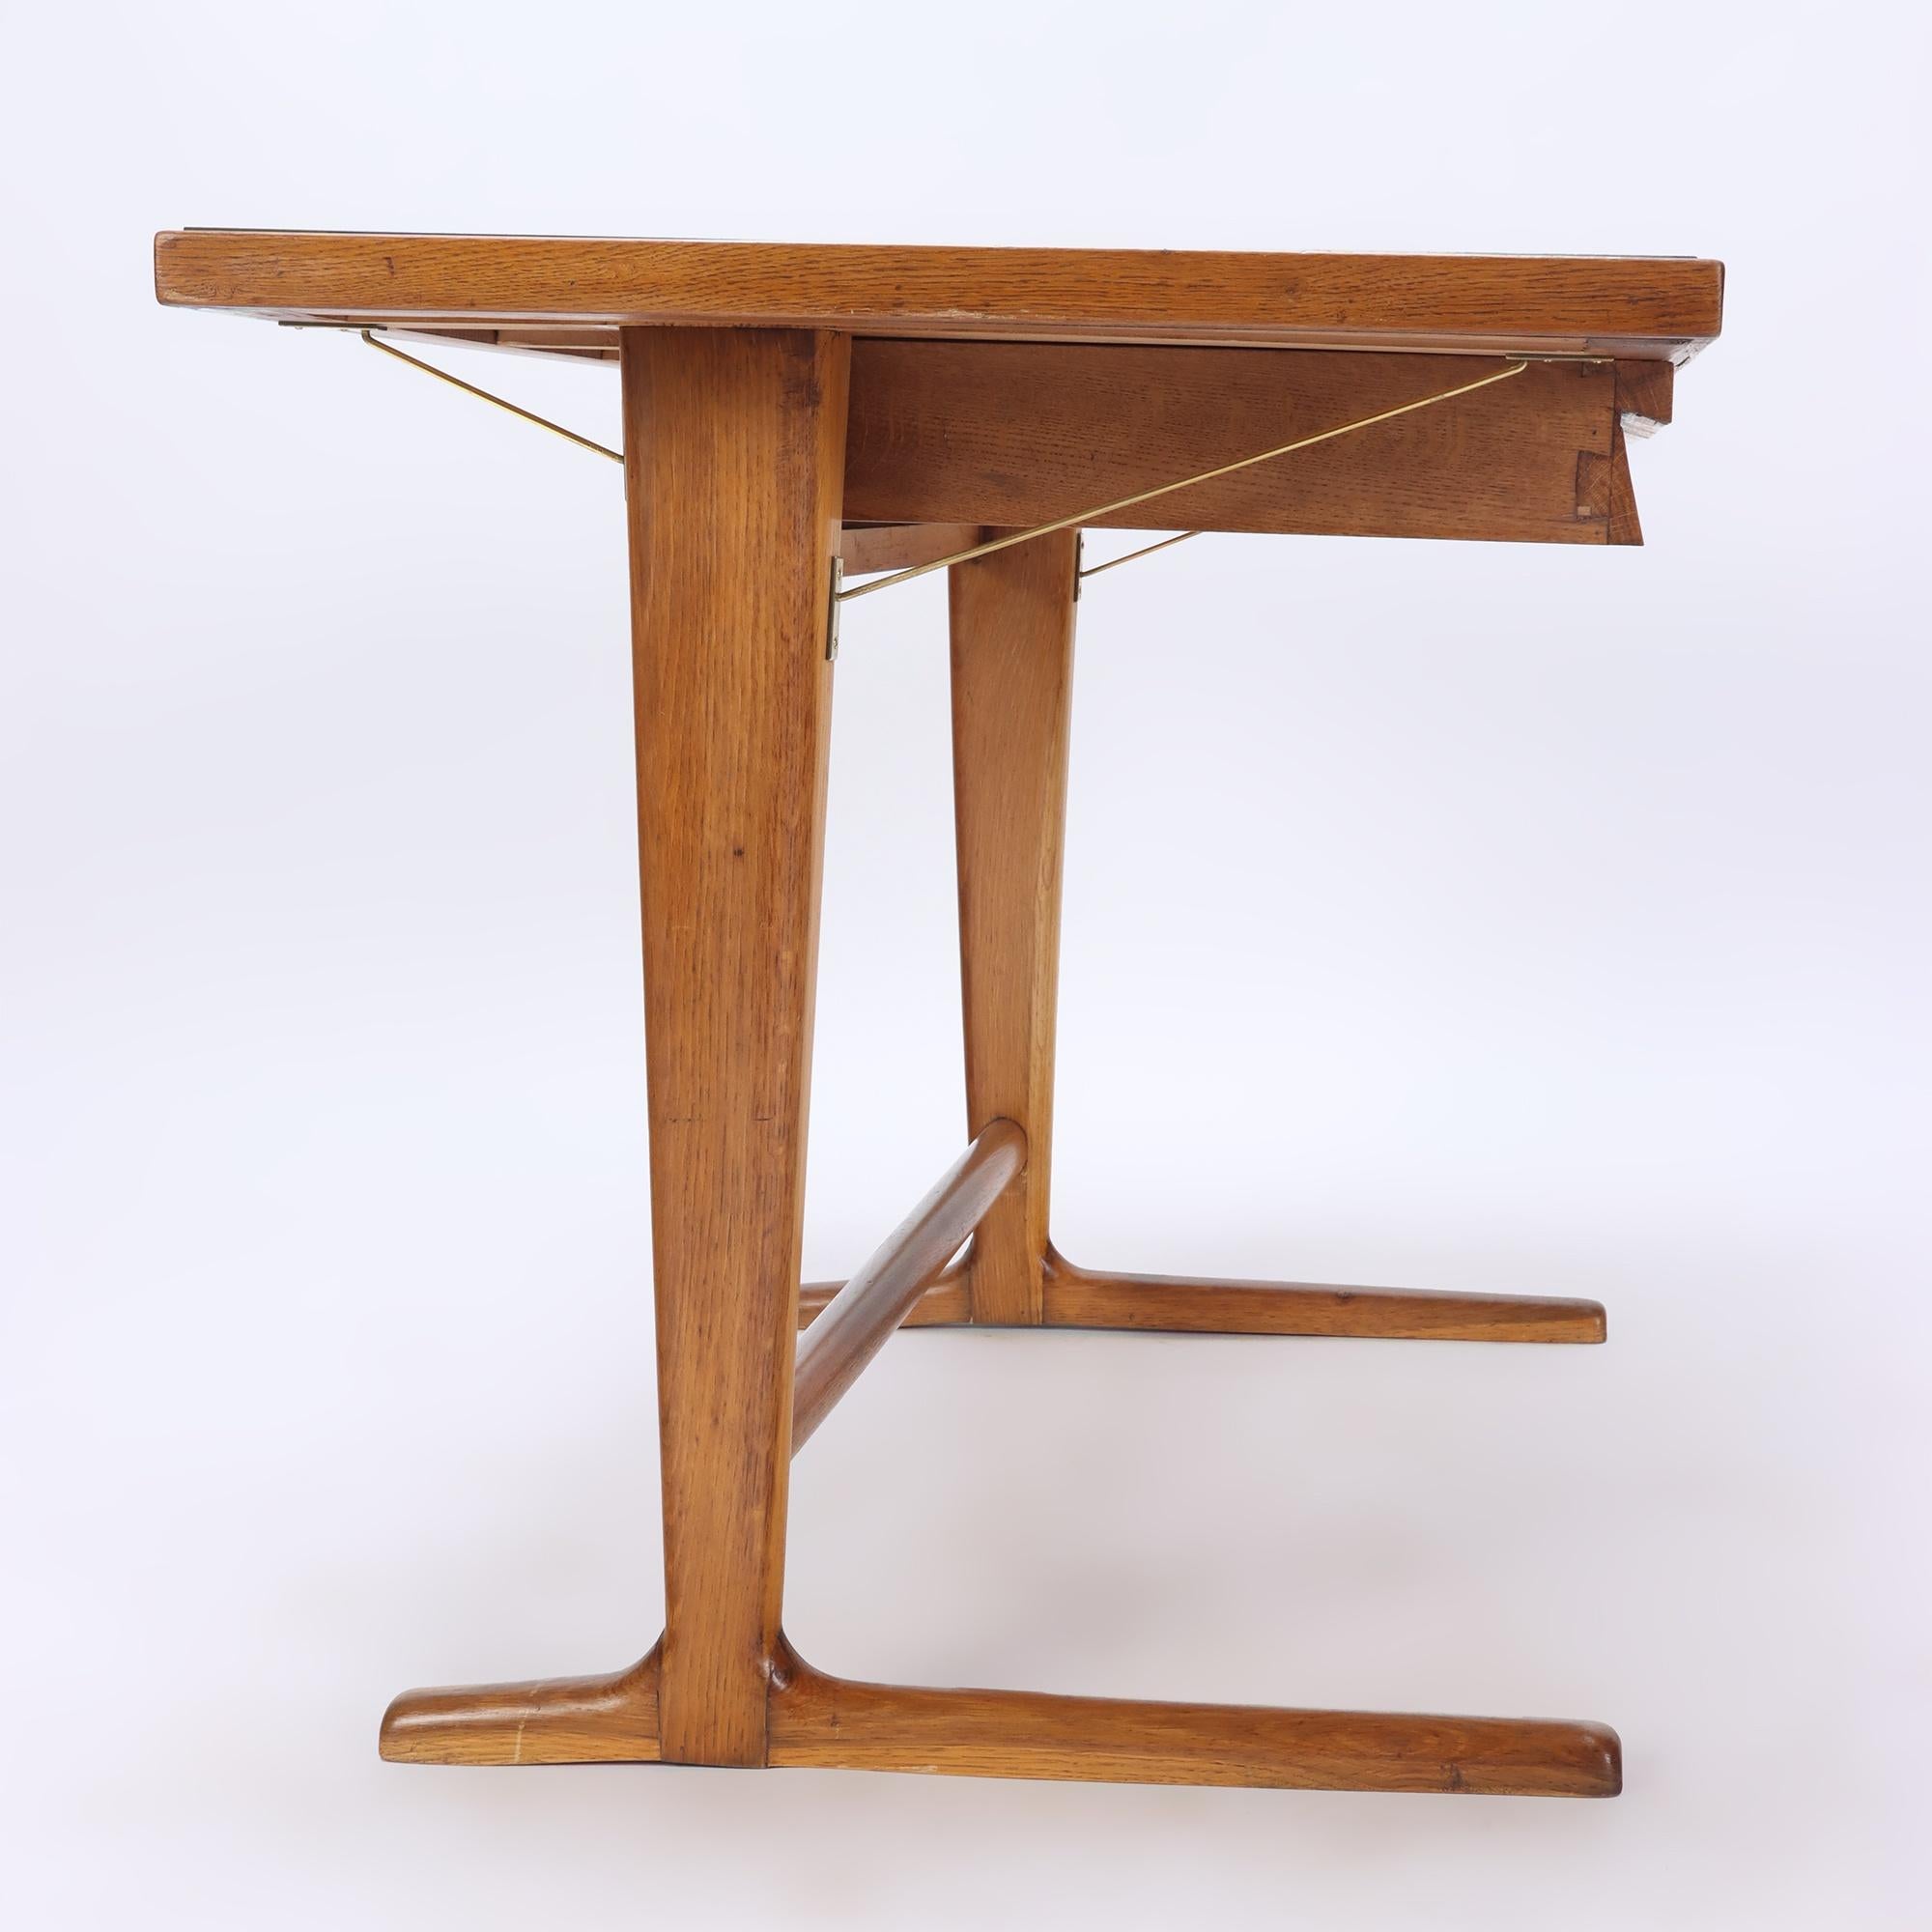 Italian Architect's Oak Table / Desk Made with a Slant, circa 1960 In Good Condition For Sale In Philadelphia, PA